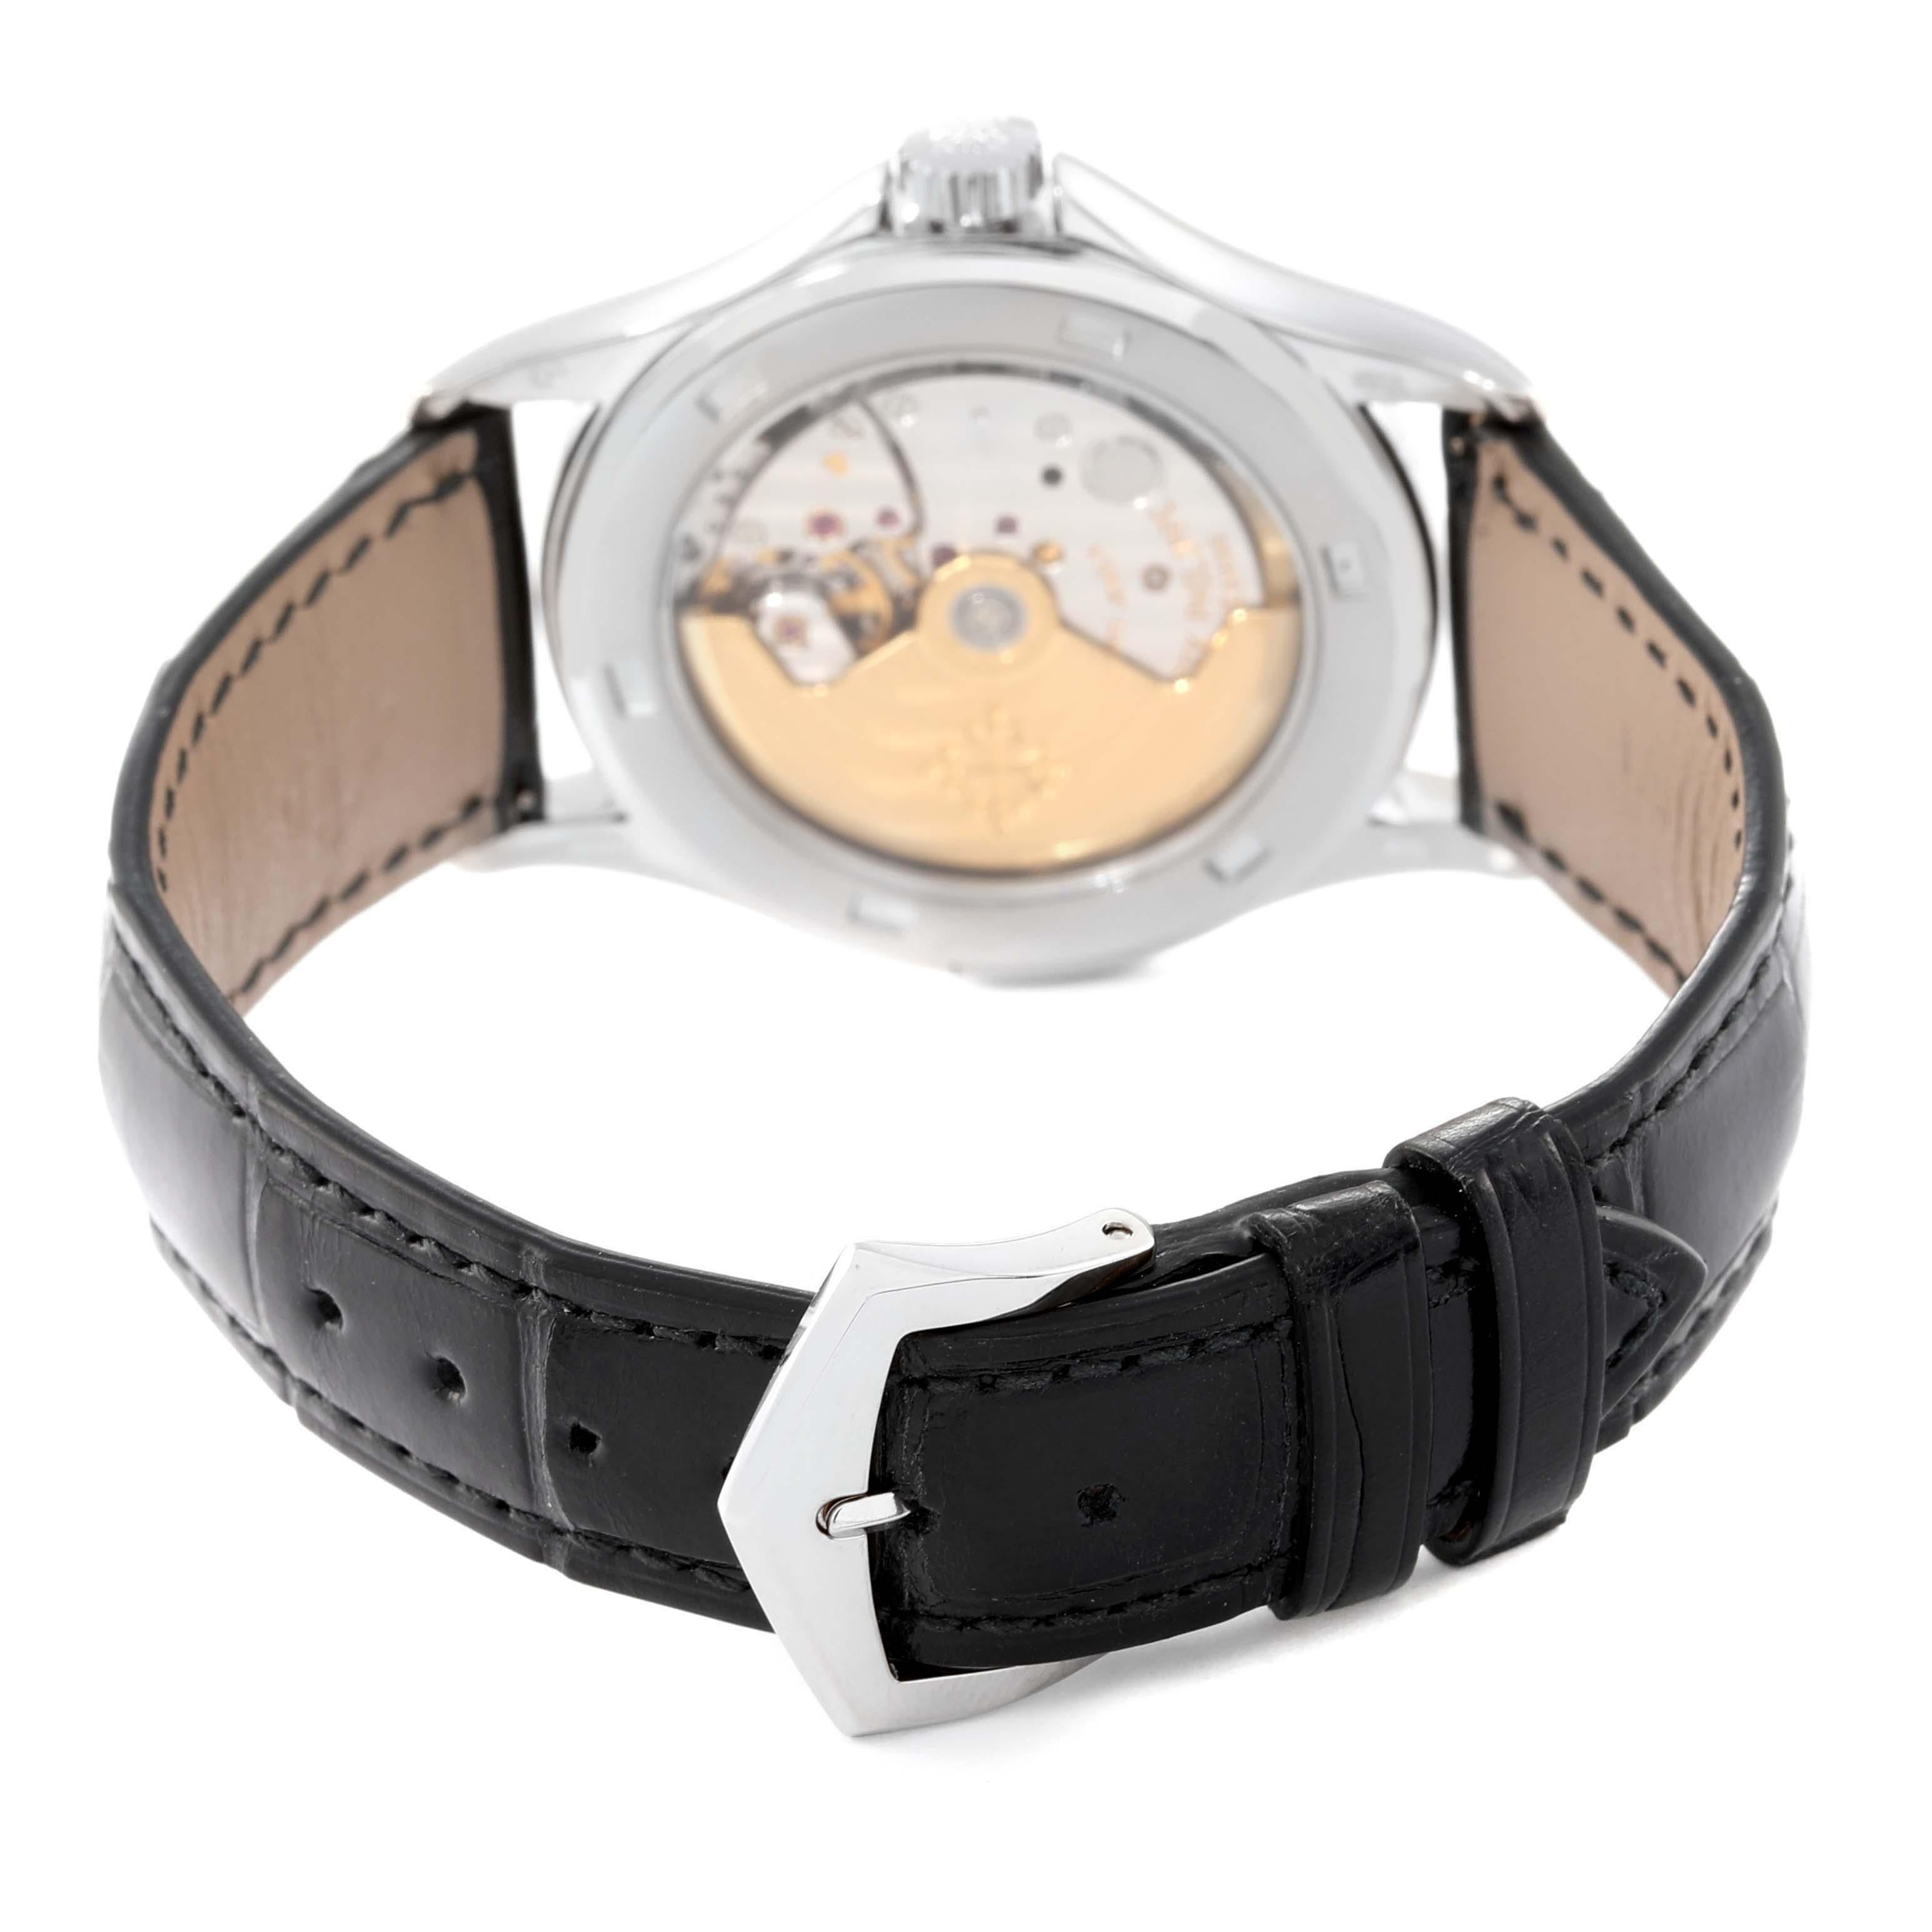 Patek Philippe Calatrava White Gold Automatic Mens Watch 5117 For Sale 1